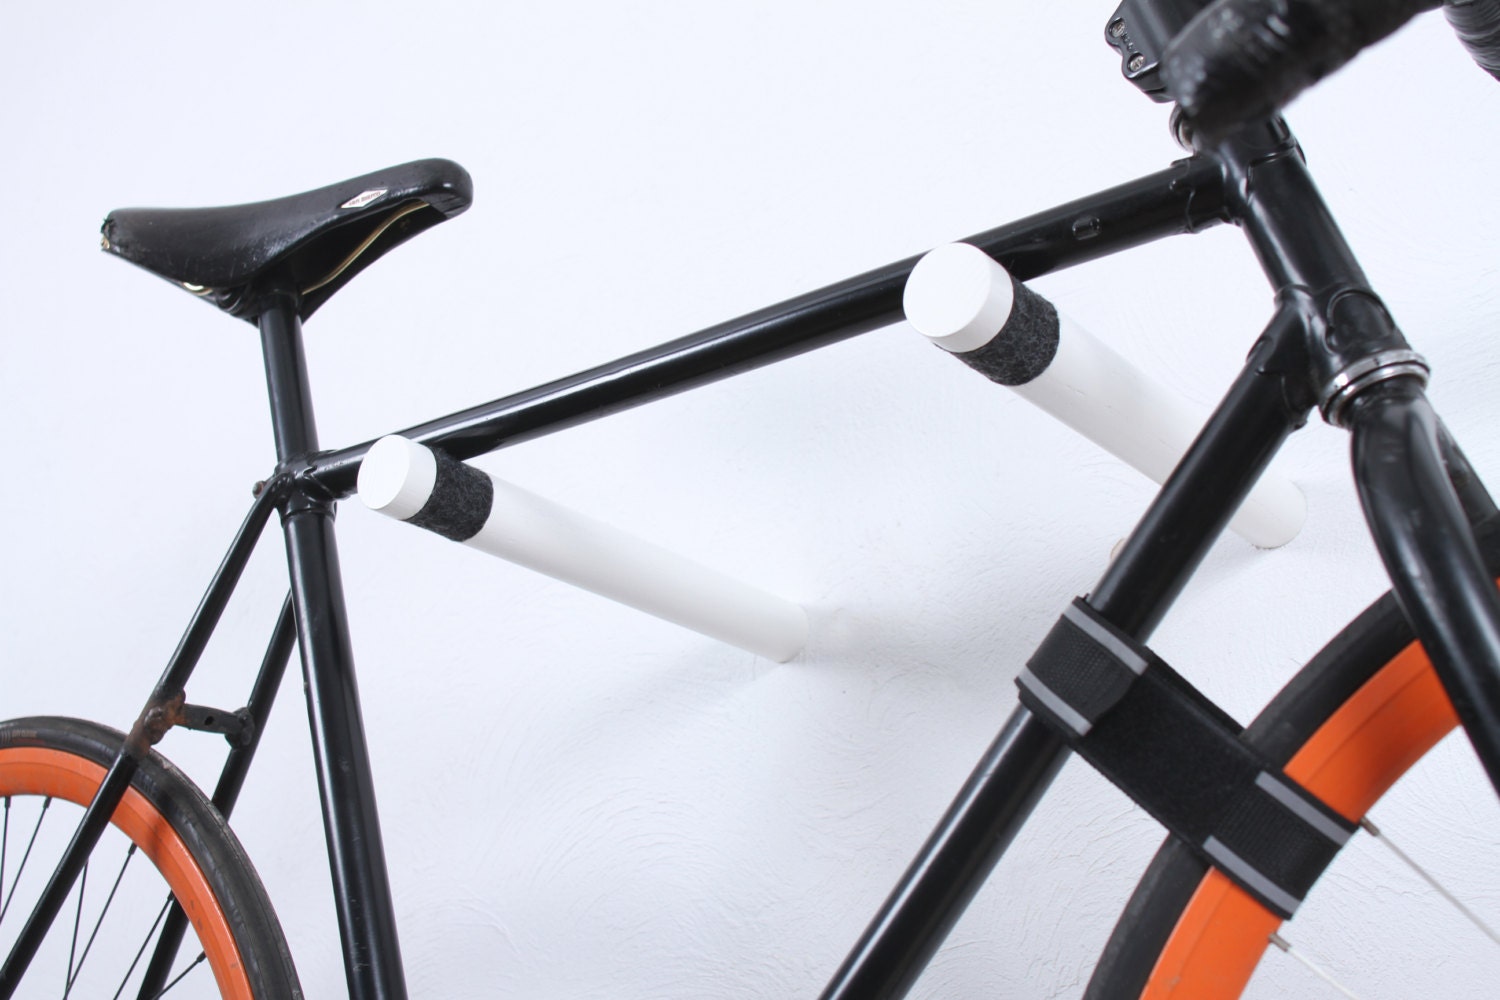 Tokyo Bike Rack Wall Mount / Wooden Wall Hook for Bike Storage / Vertical  Bike Holder 